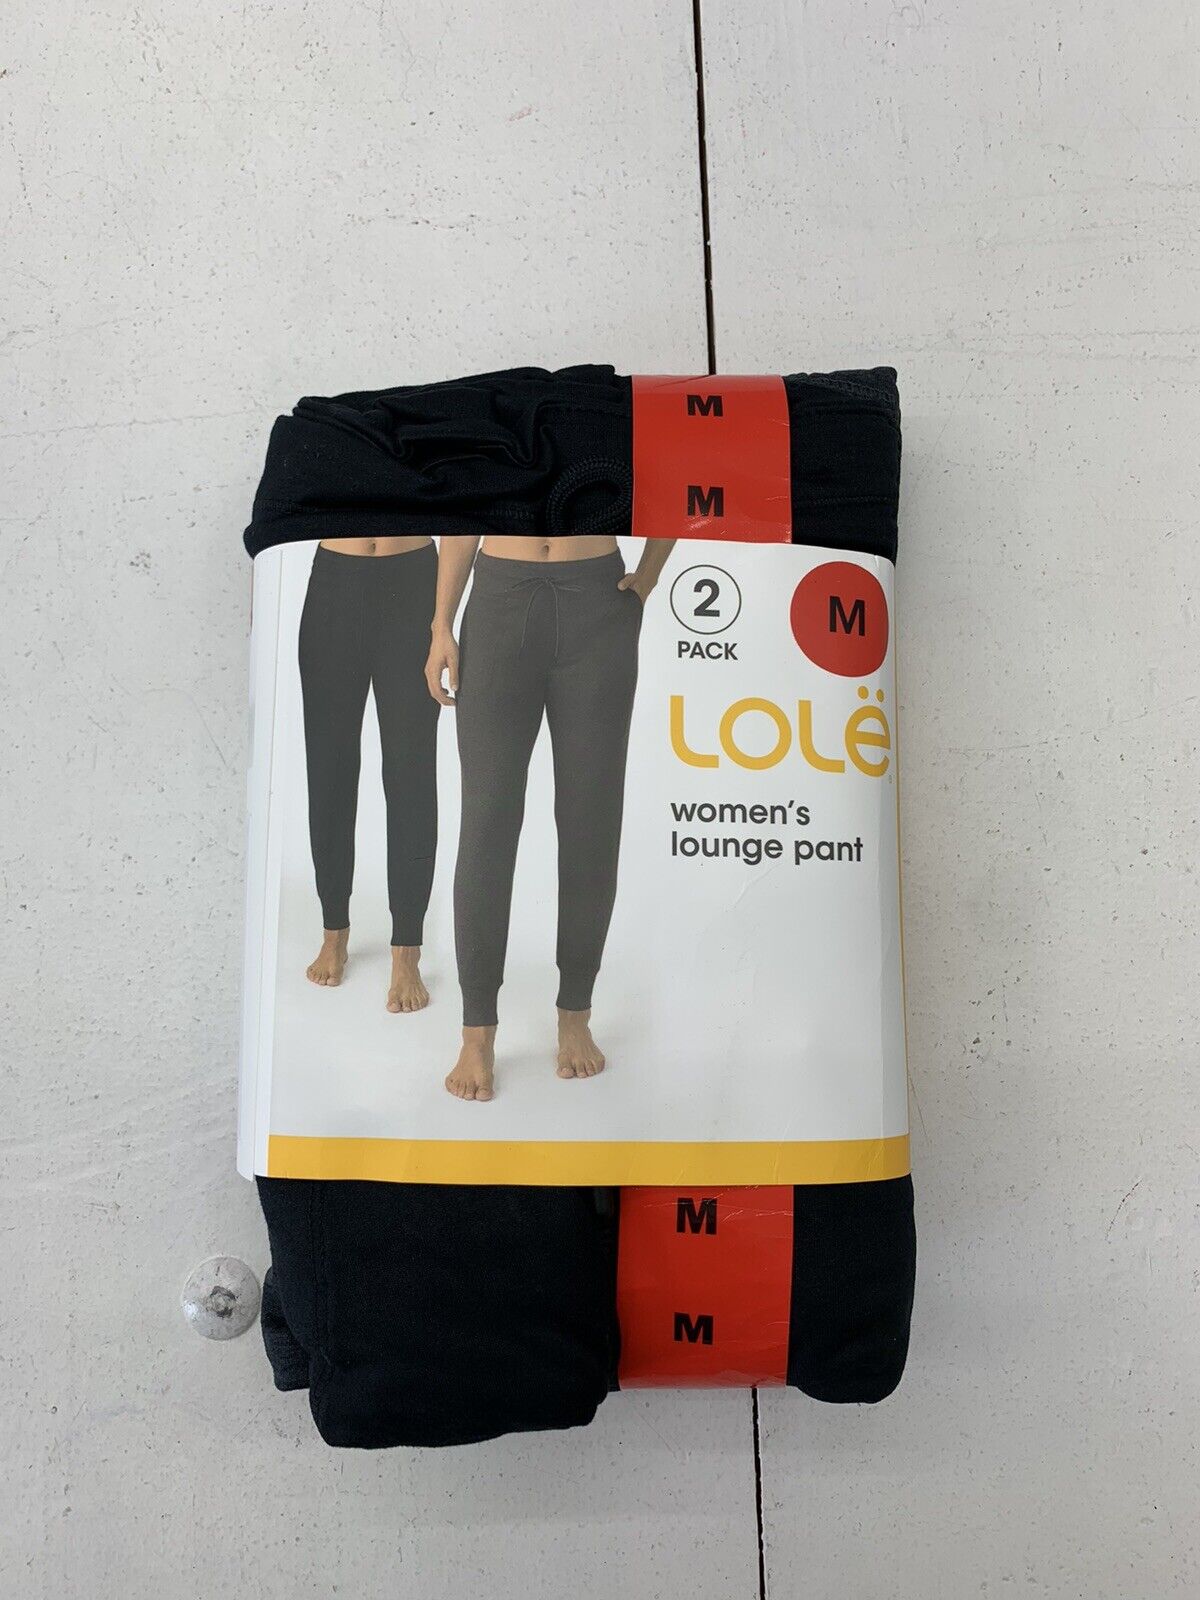 Lole Womens Lounge Pant - 2 Pack - Charcoal (grey) & Black Size Medium -  beyond exchange